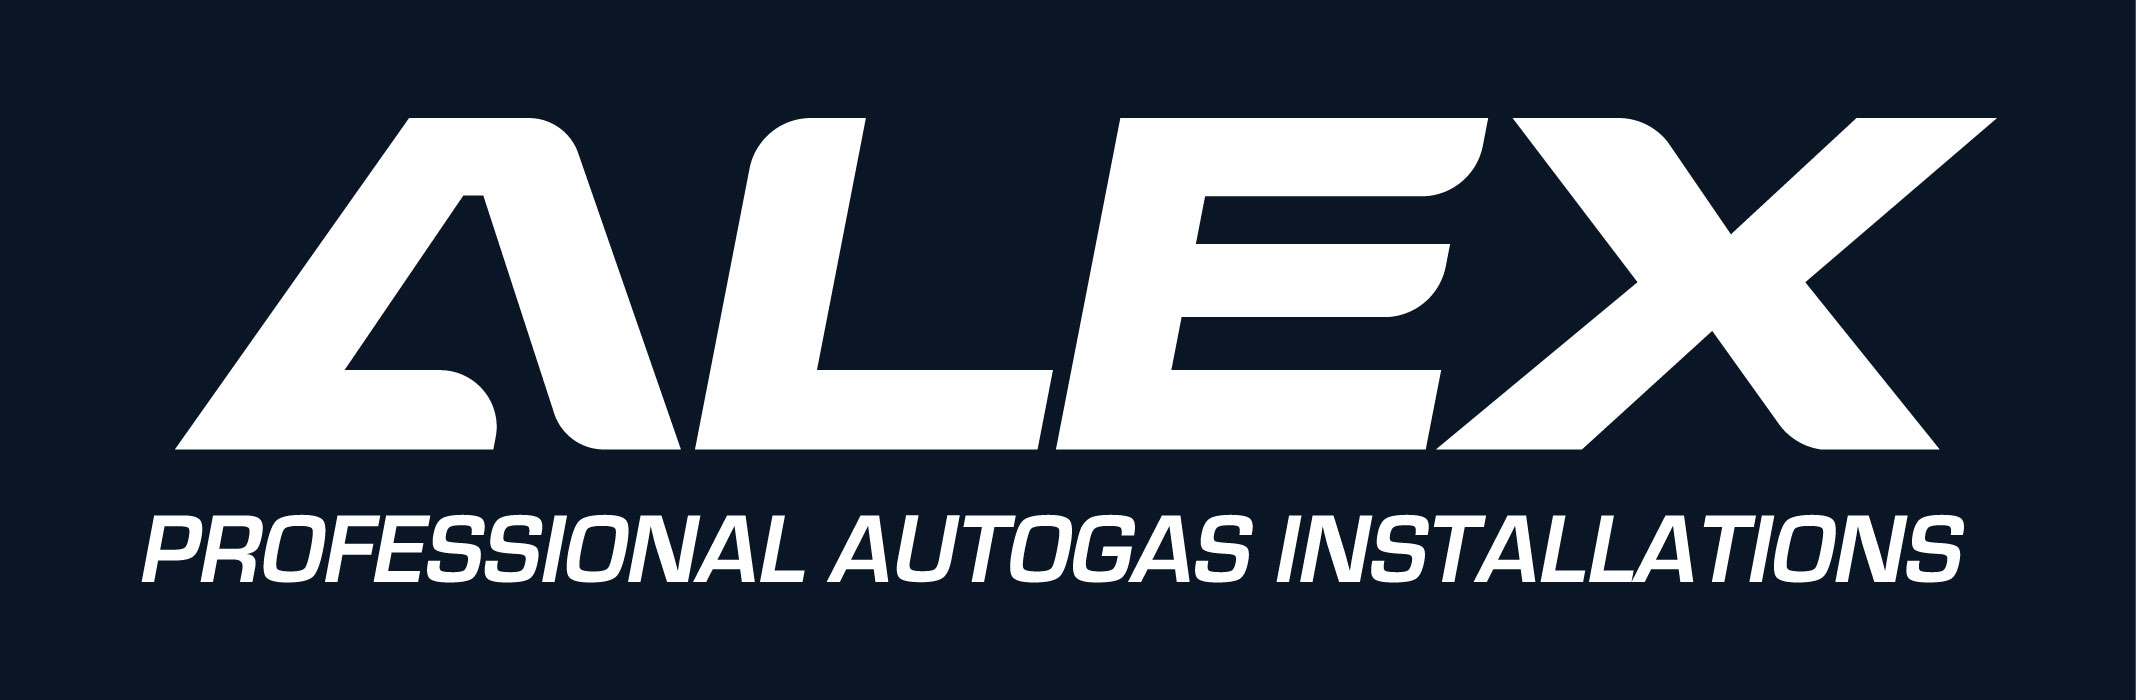 Autogas ALEX Profesional Autogas Installations 